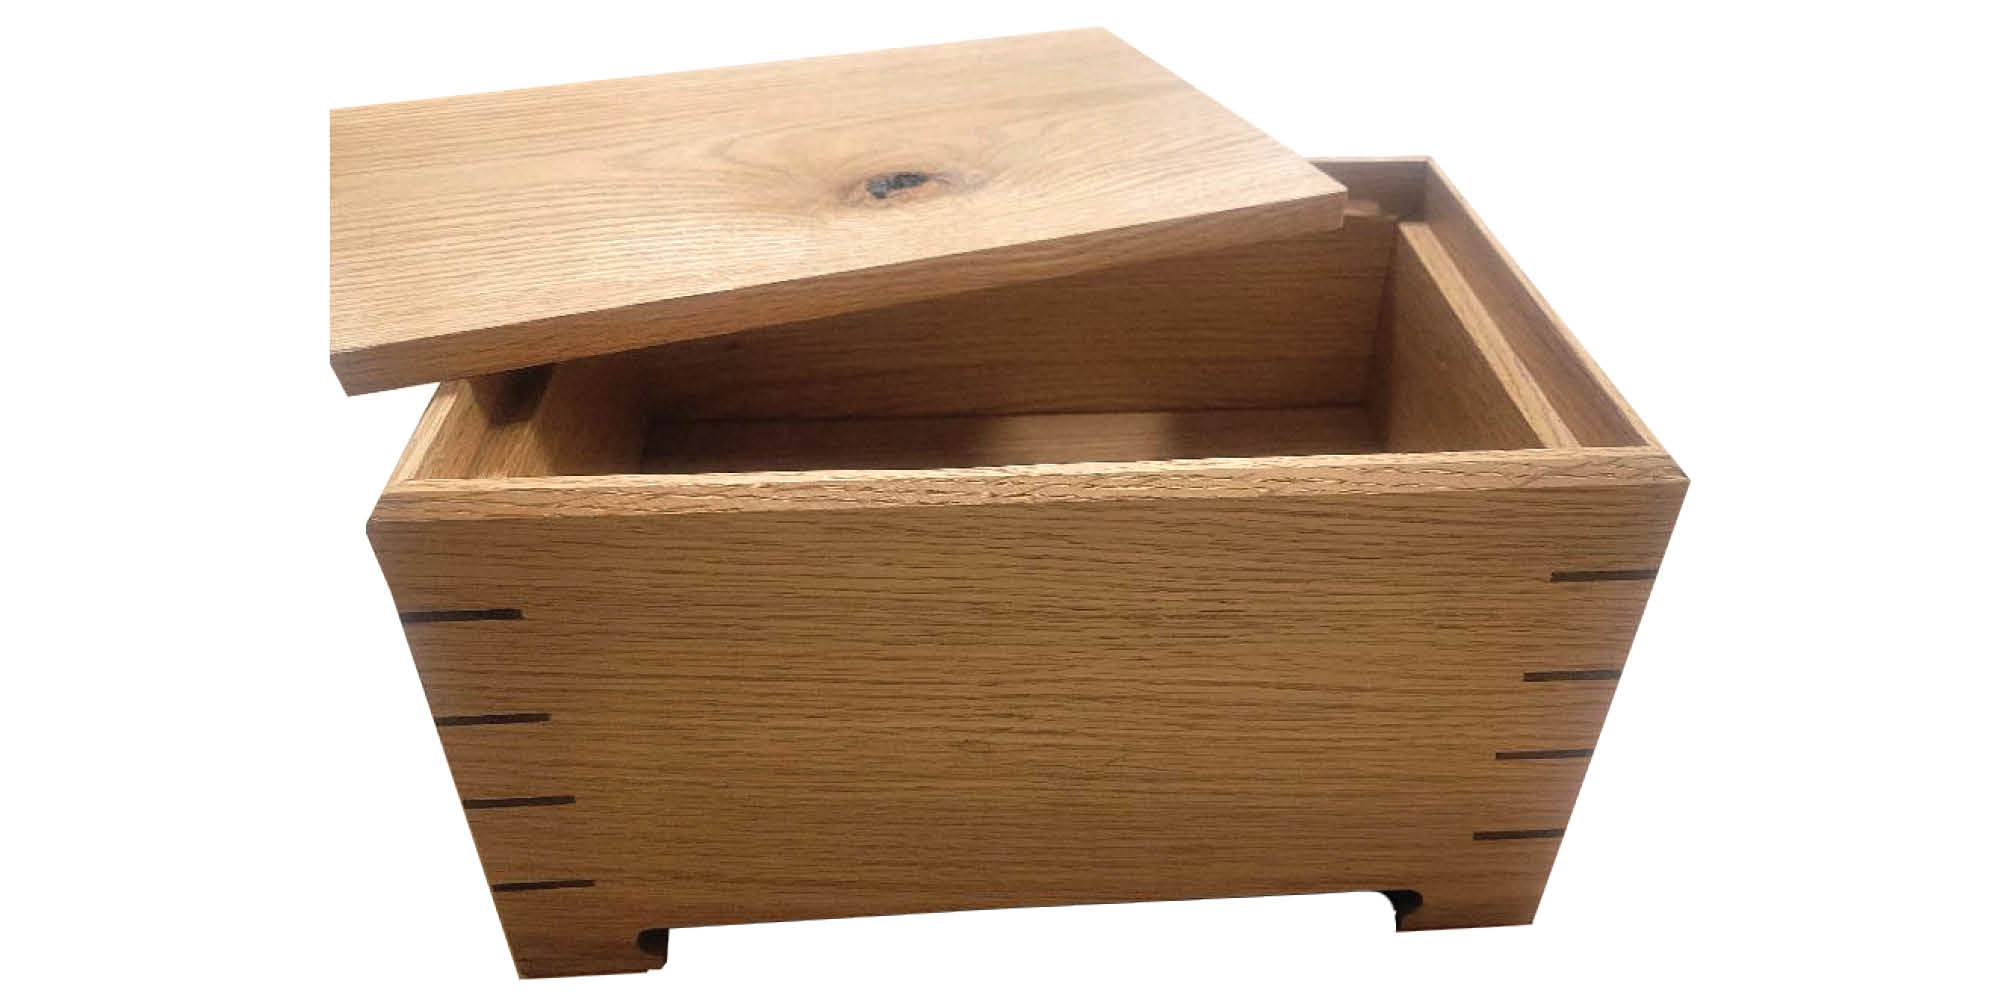 Intro to Fine Woodworking Hidden Compartment Keepsake Box Class - December